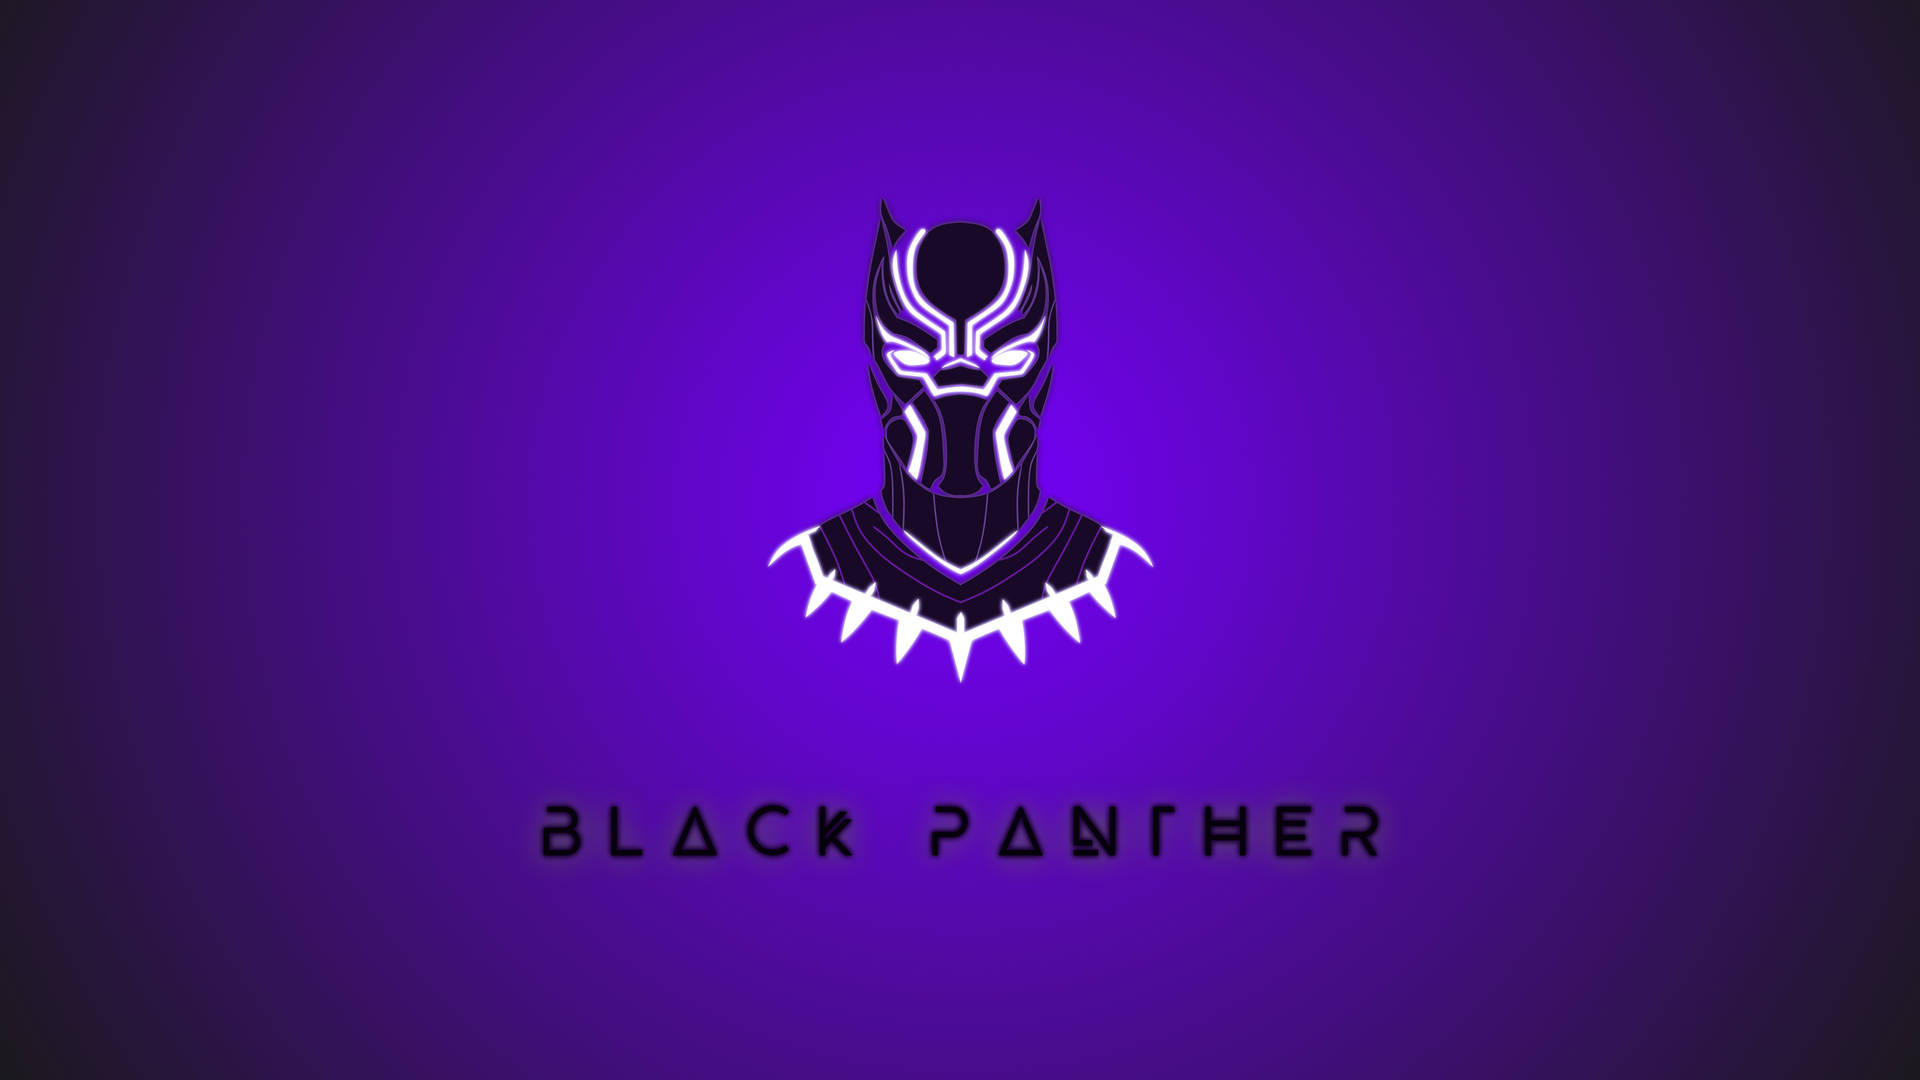 Black Panther 4k Ultra Hd Dark Graphic Art Background